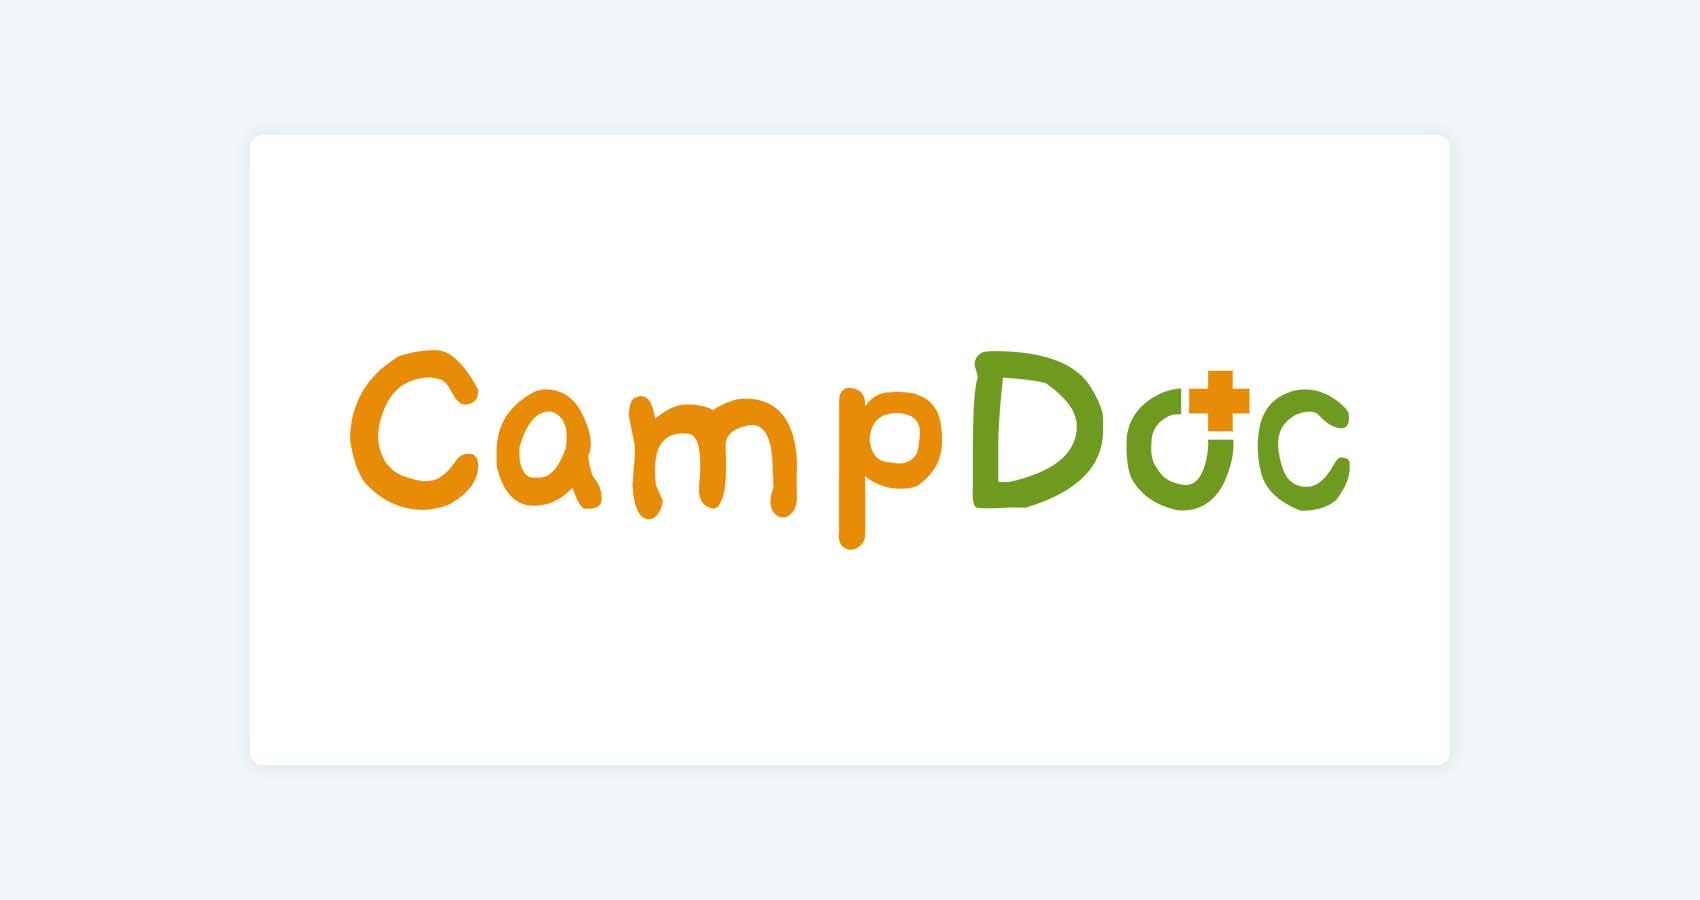 CampDoc logo